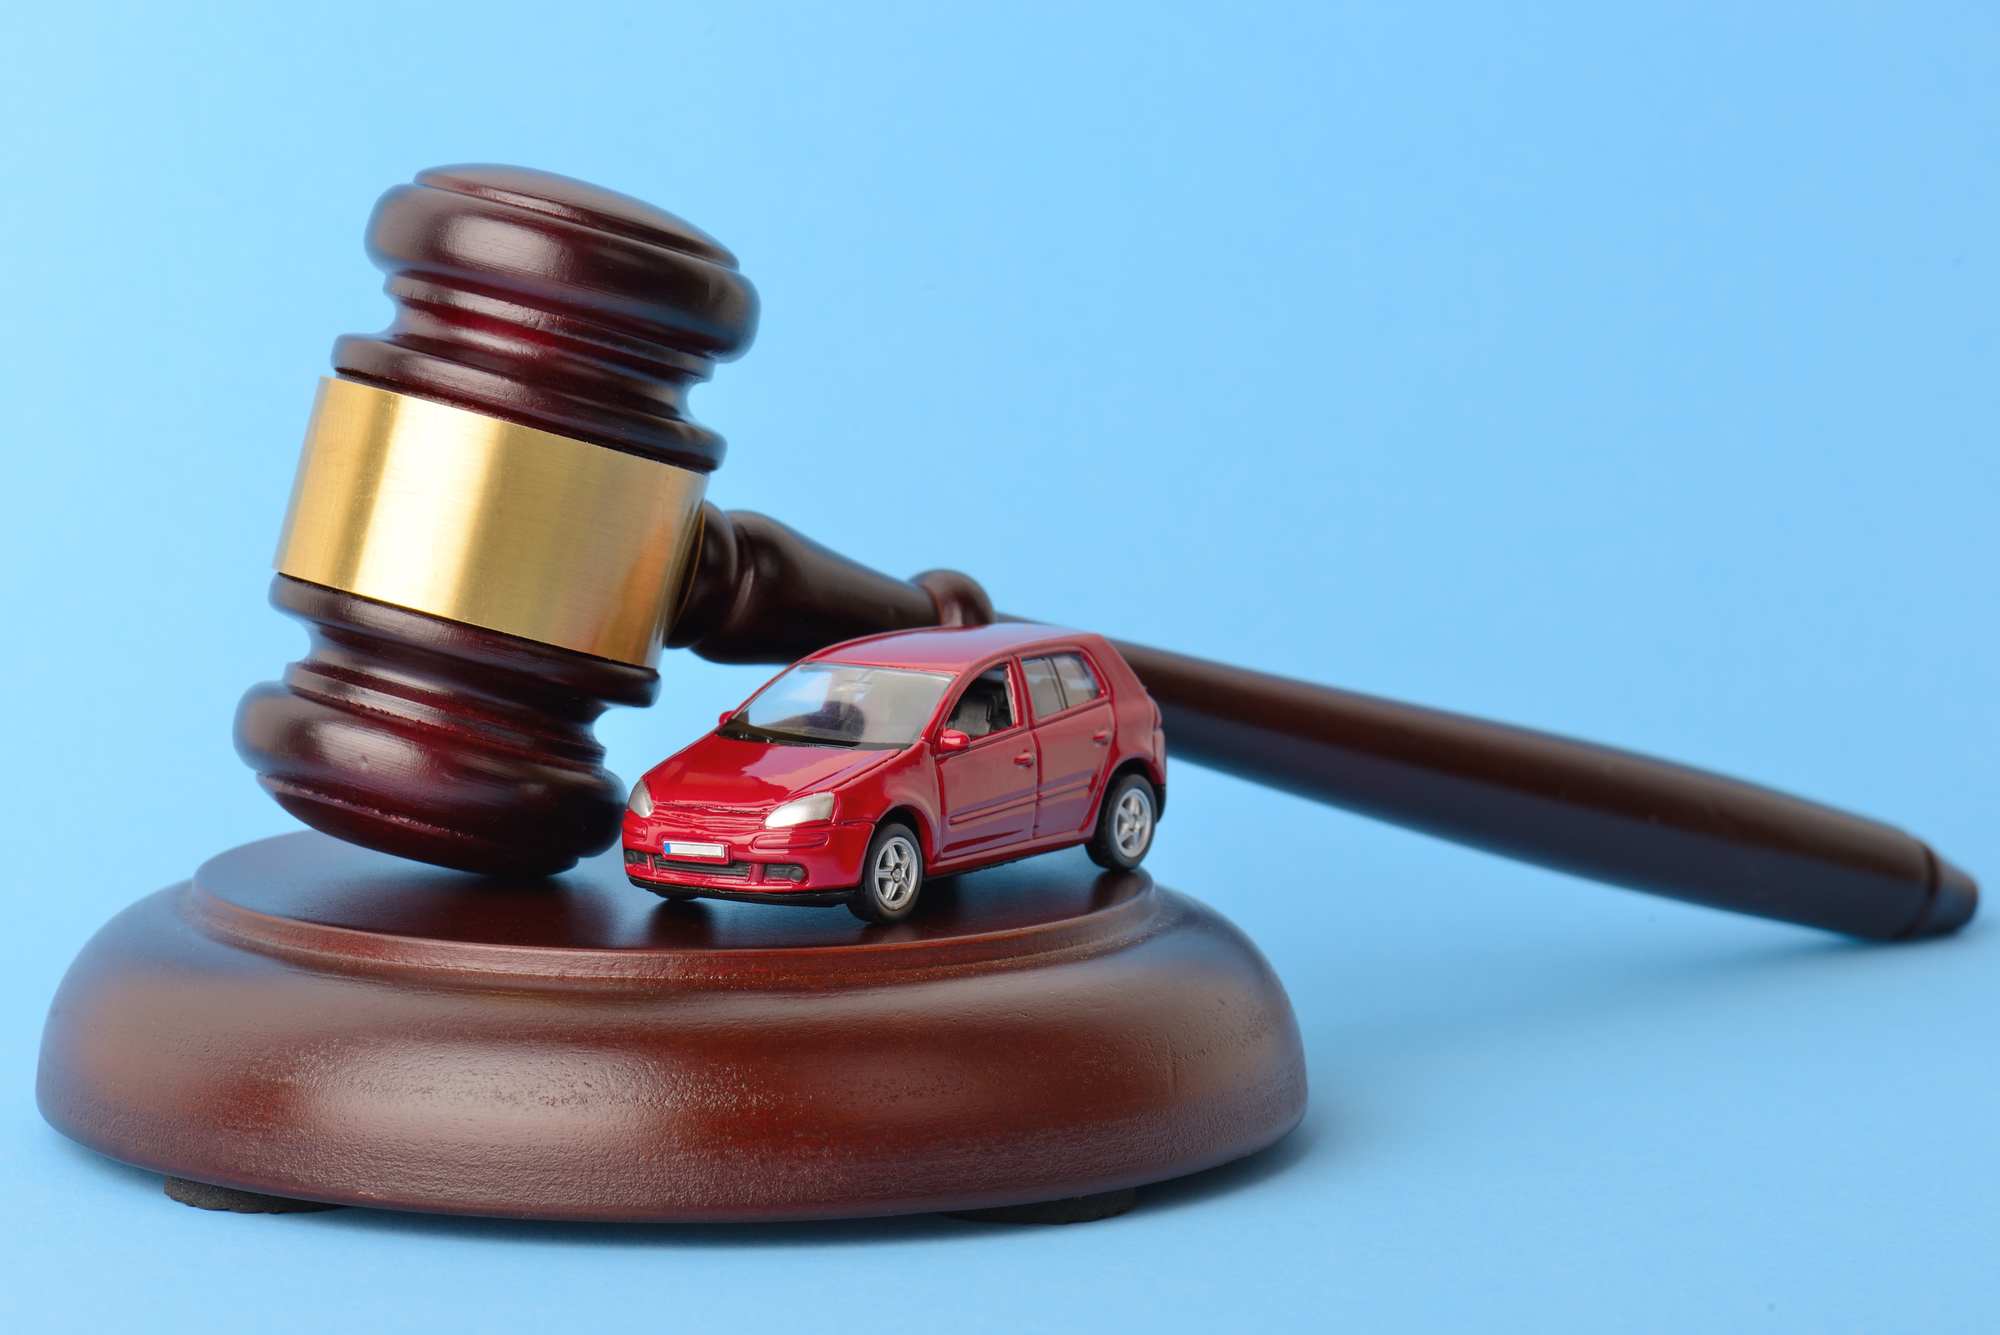  car accident settlement attorney Brisbane      